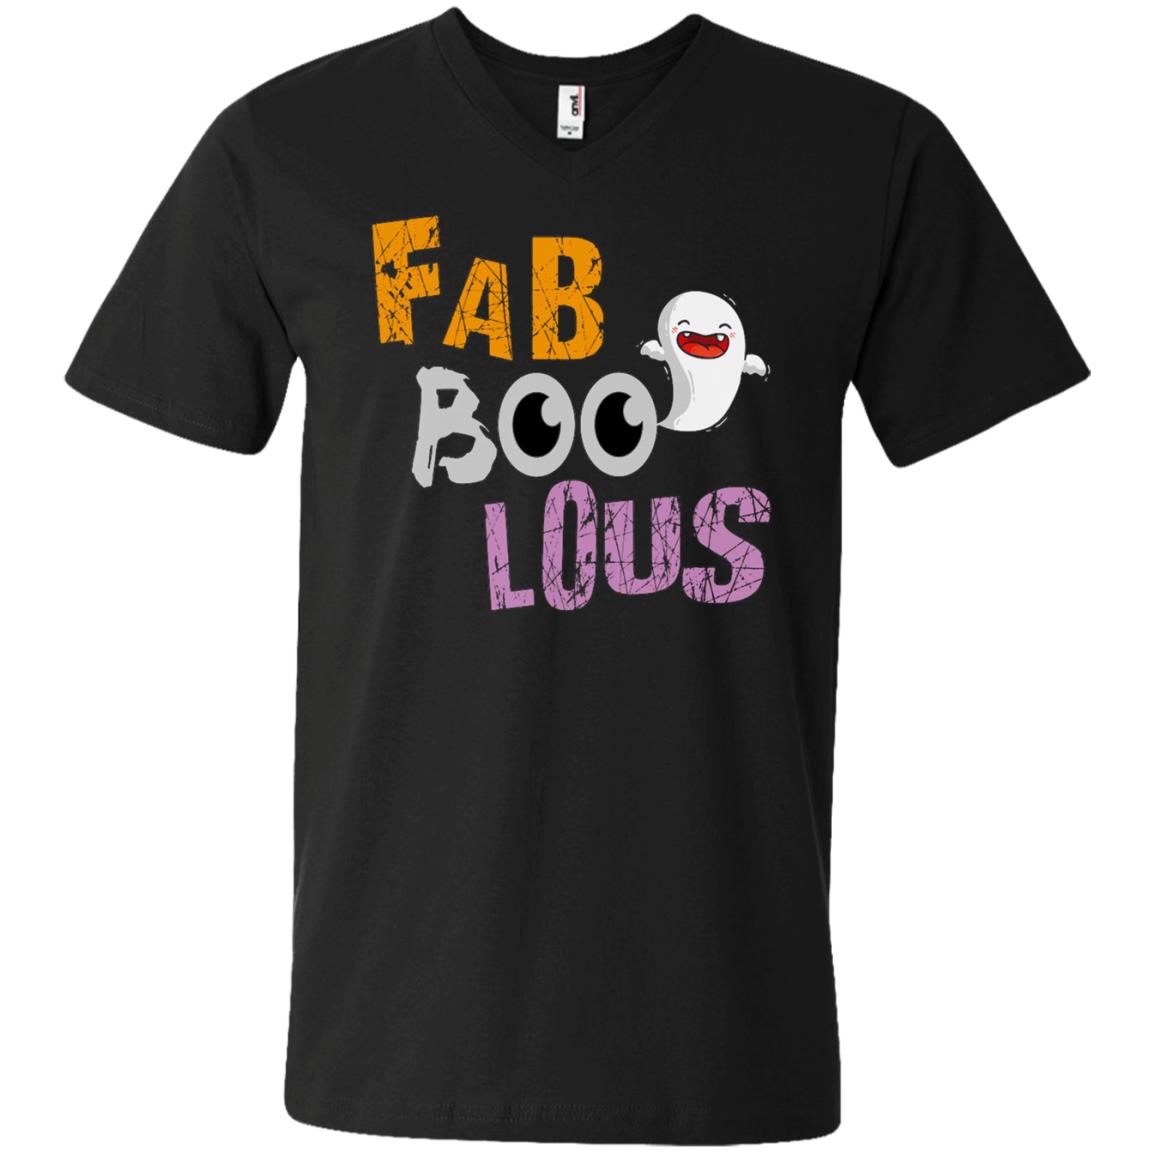 Fab-boo-lous Look Fabulous This Halloween T-shirt